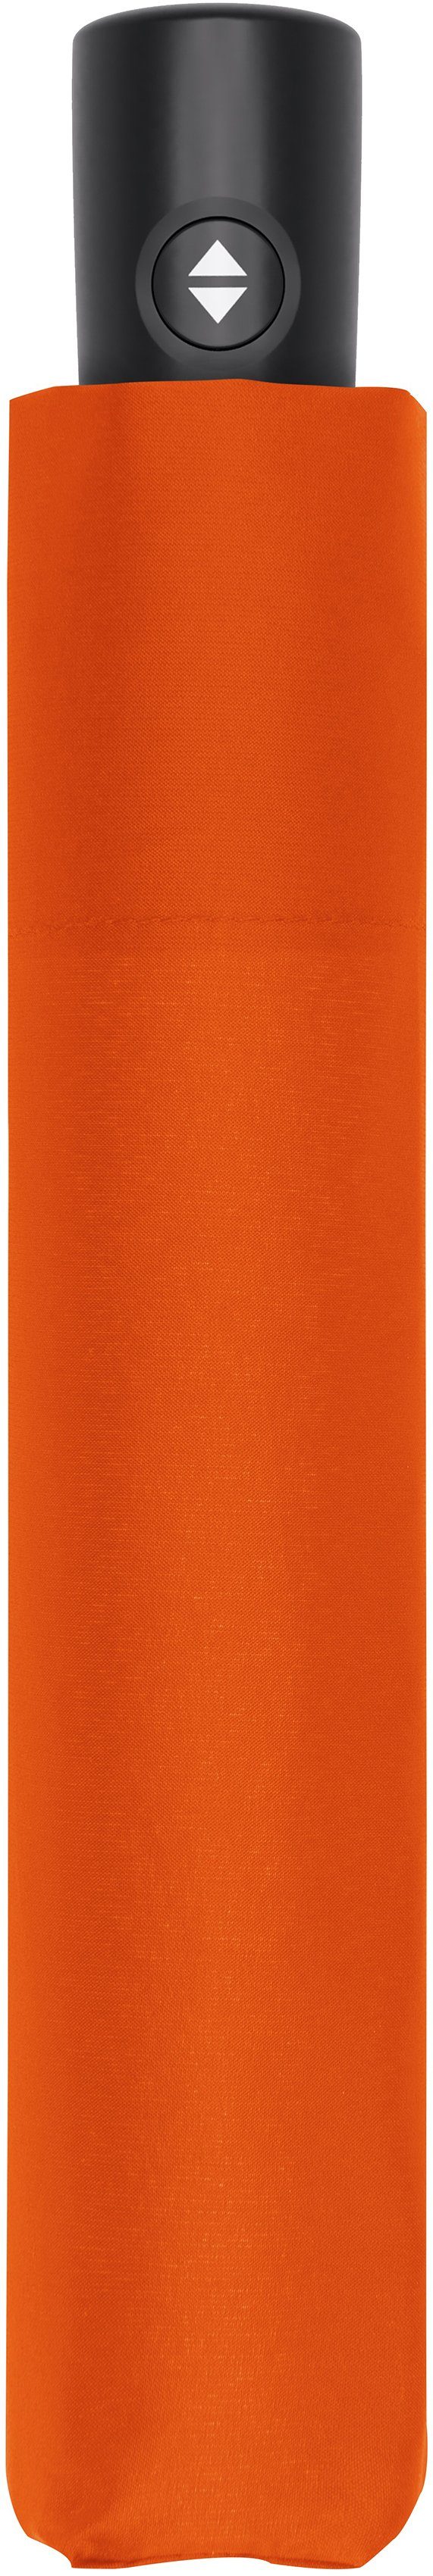 doppler® Taschenregenschirm Zero Magic uni, Vibrant Orange